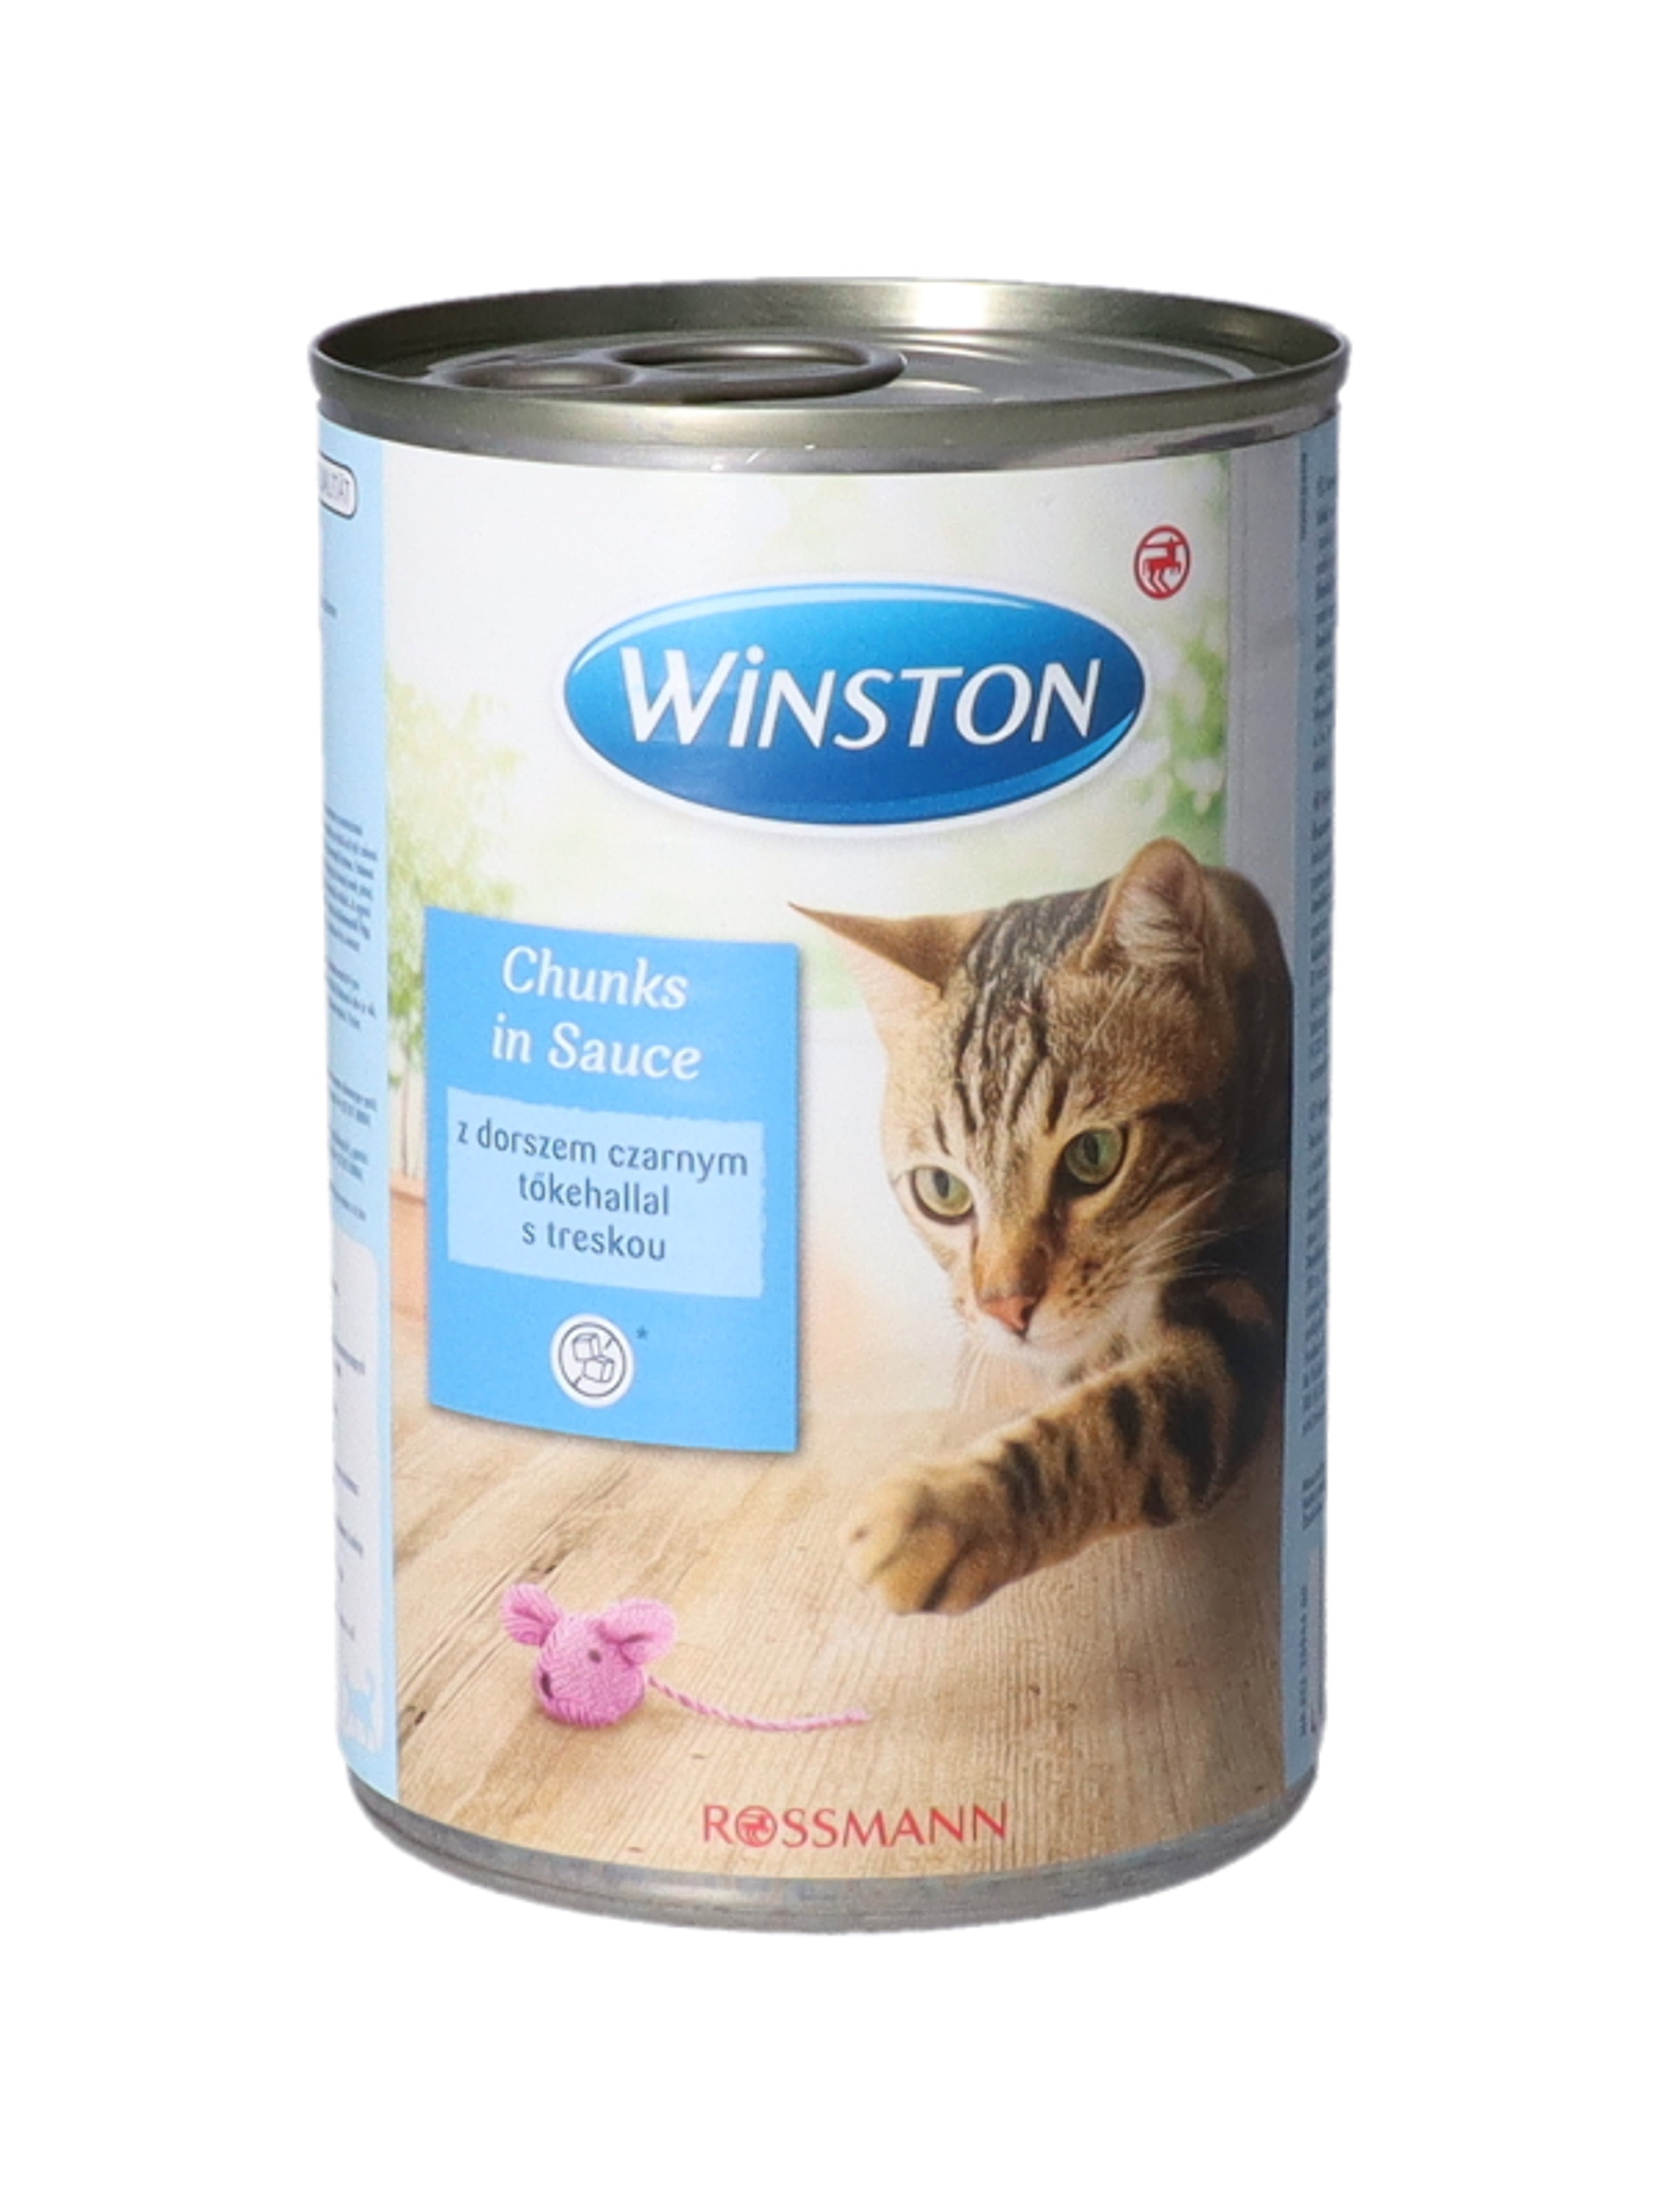 Winston konzerv macskáknak, lazaccal - 400 g